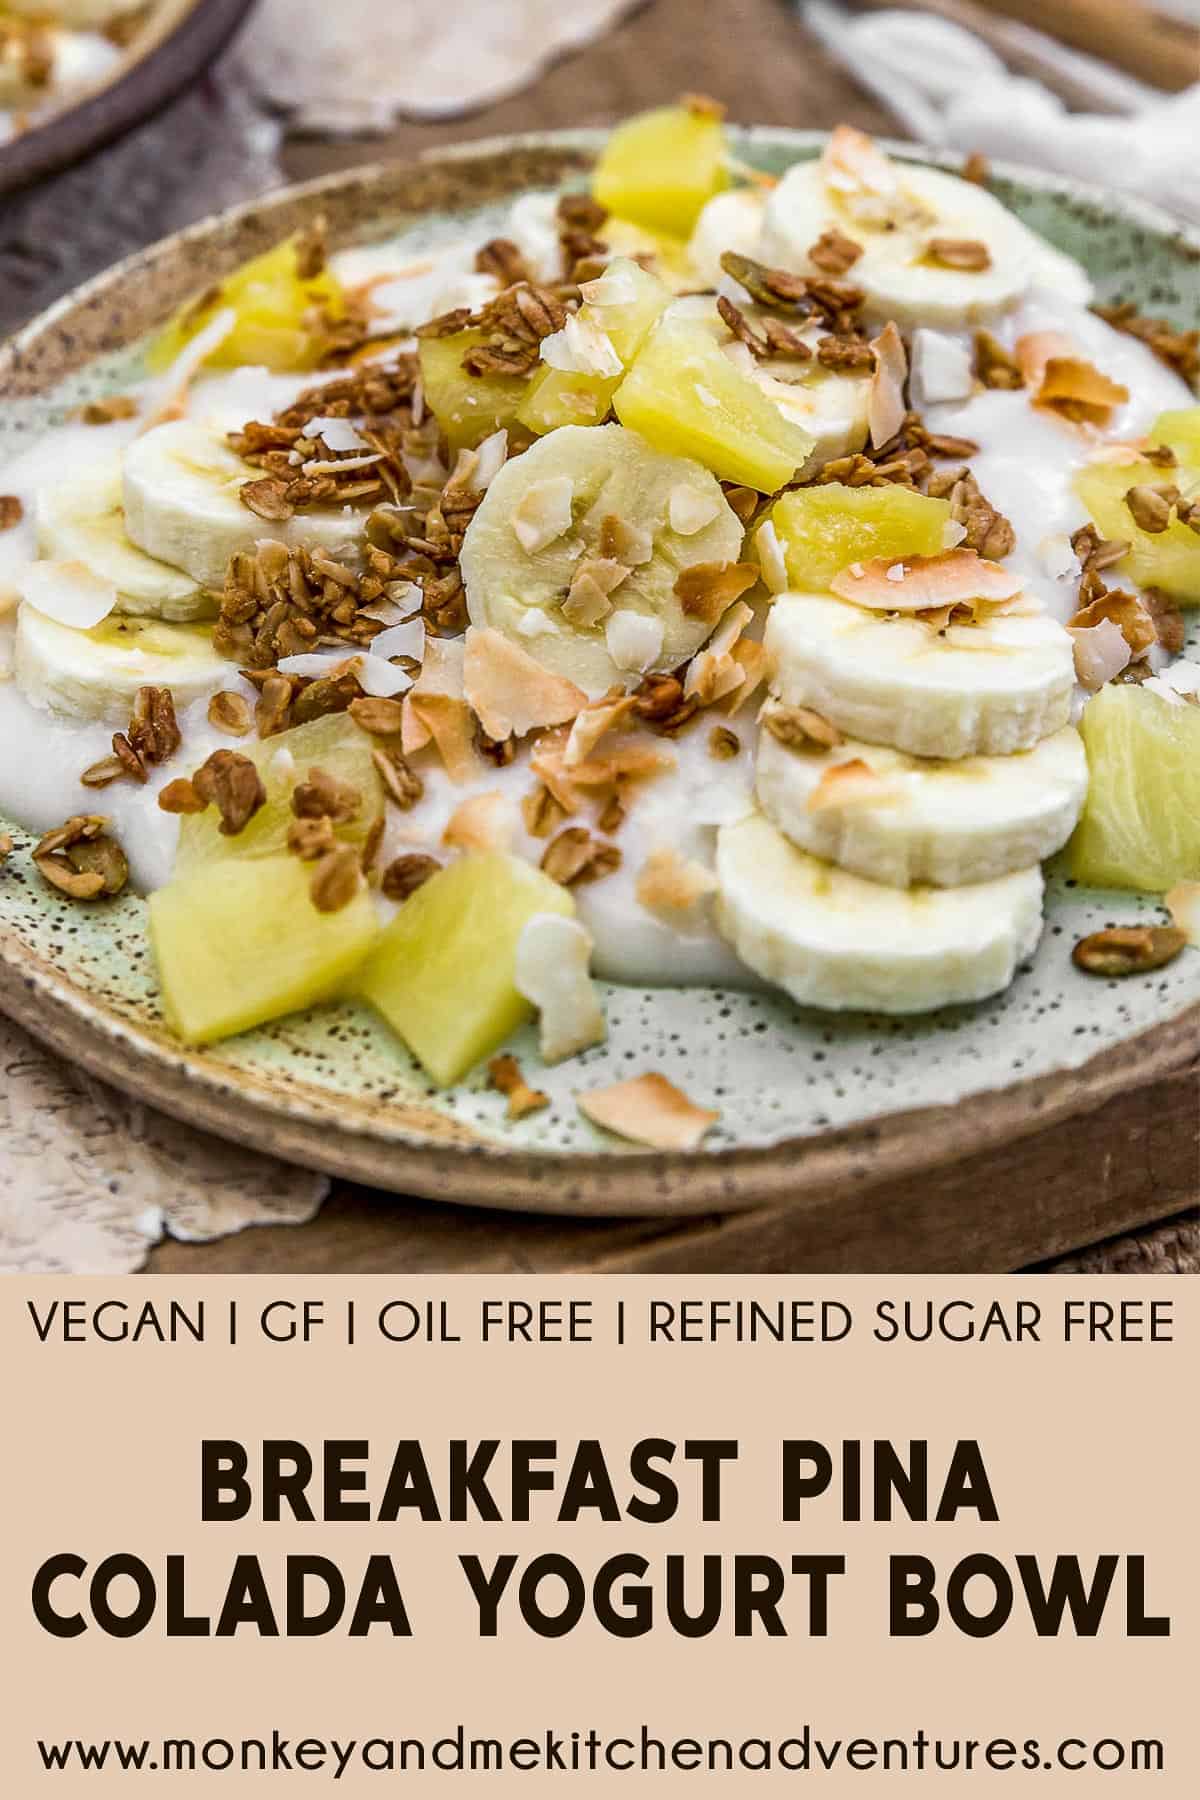 Breakfast Pina Colada Yogurt Bowl with text description